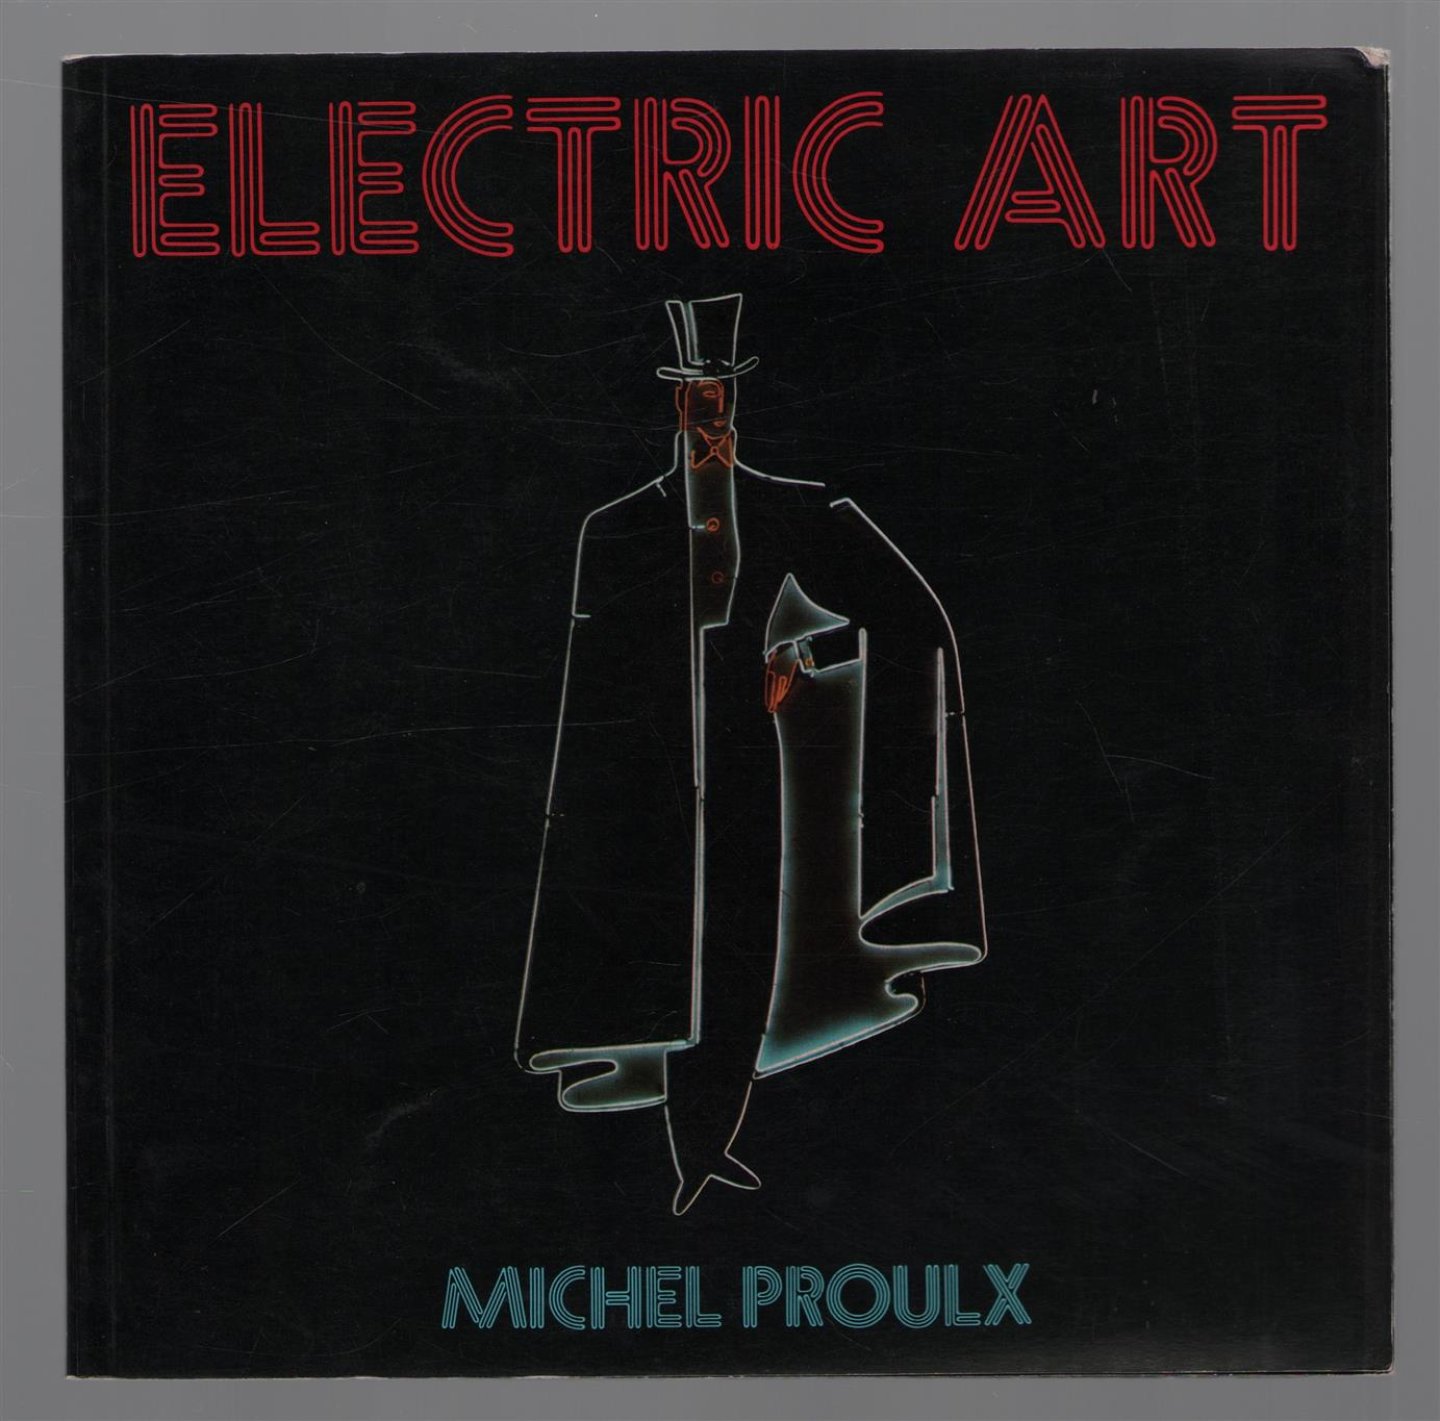 Michel Proulx - Electric art